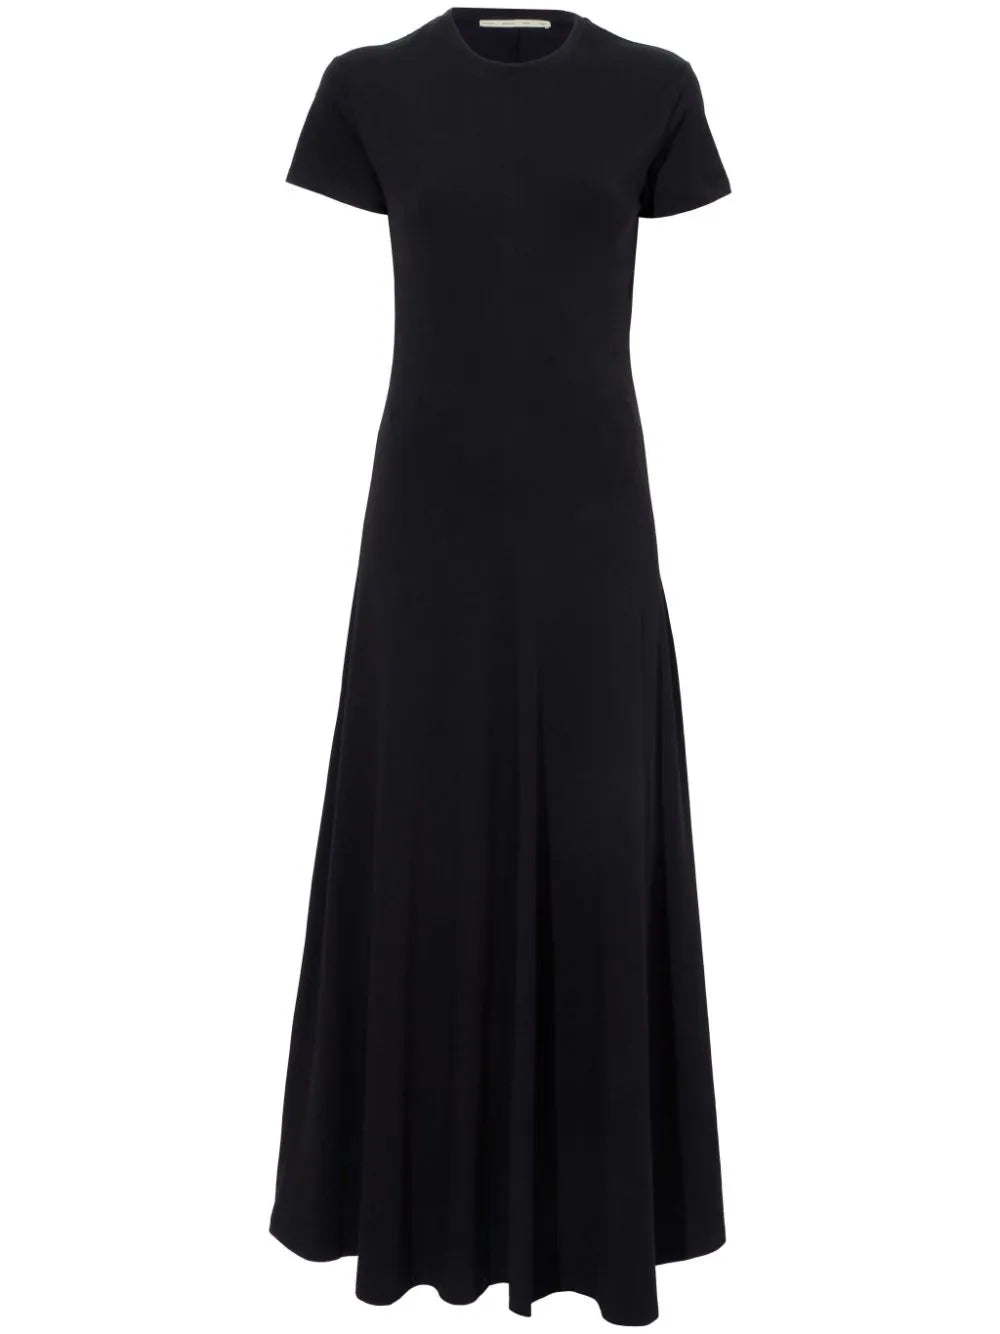 Noelle Dress in Black